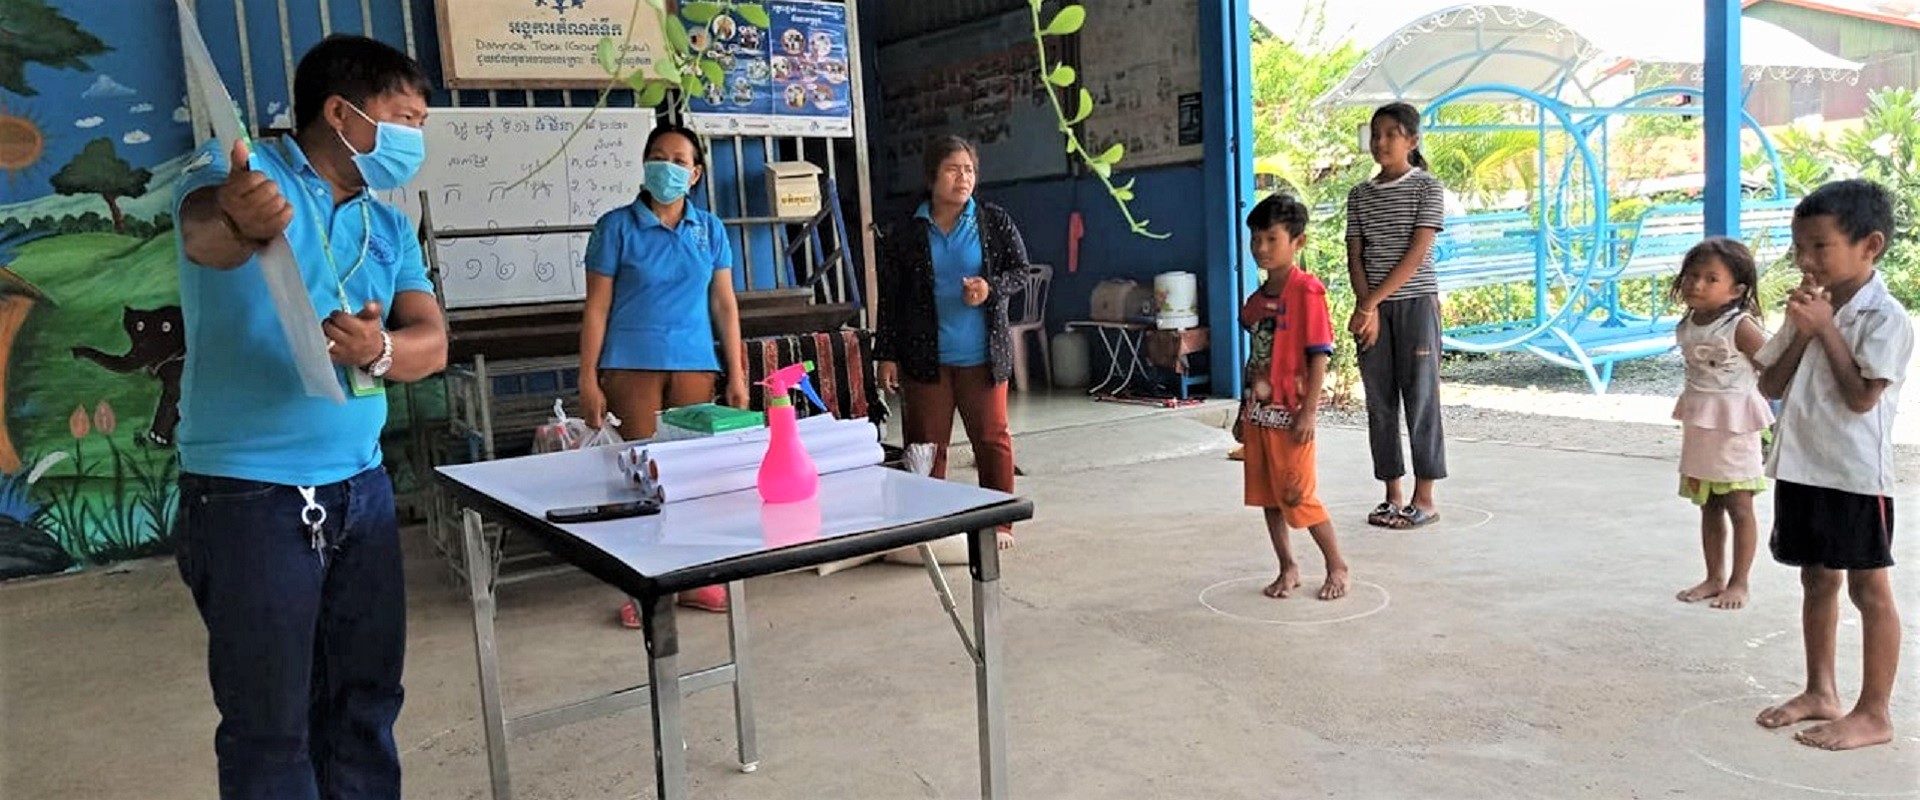 cambogia prevenire coronavirus fra i piu piccoli_mani tese 2020_cover